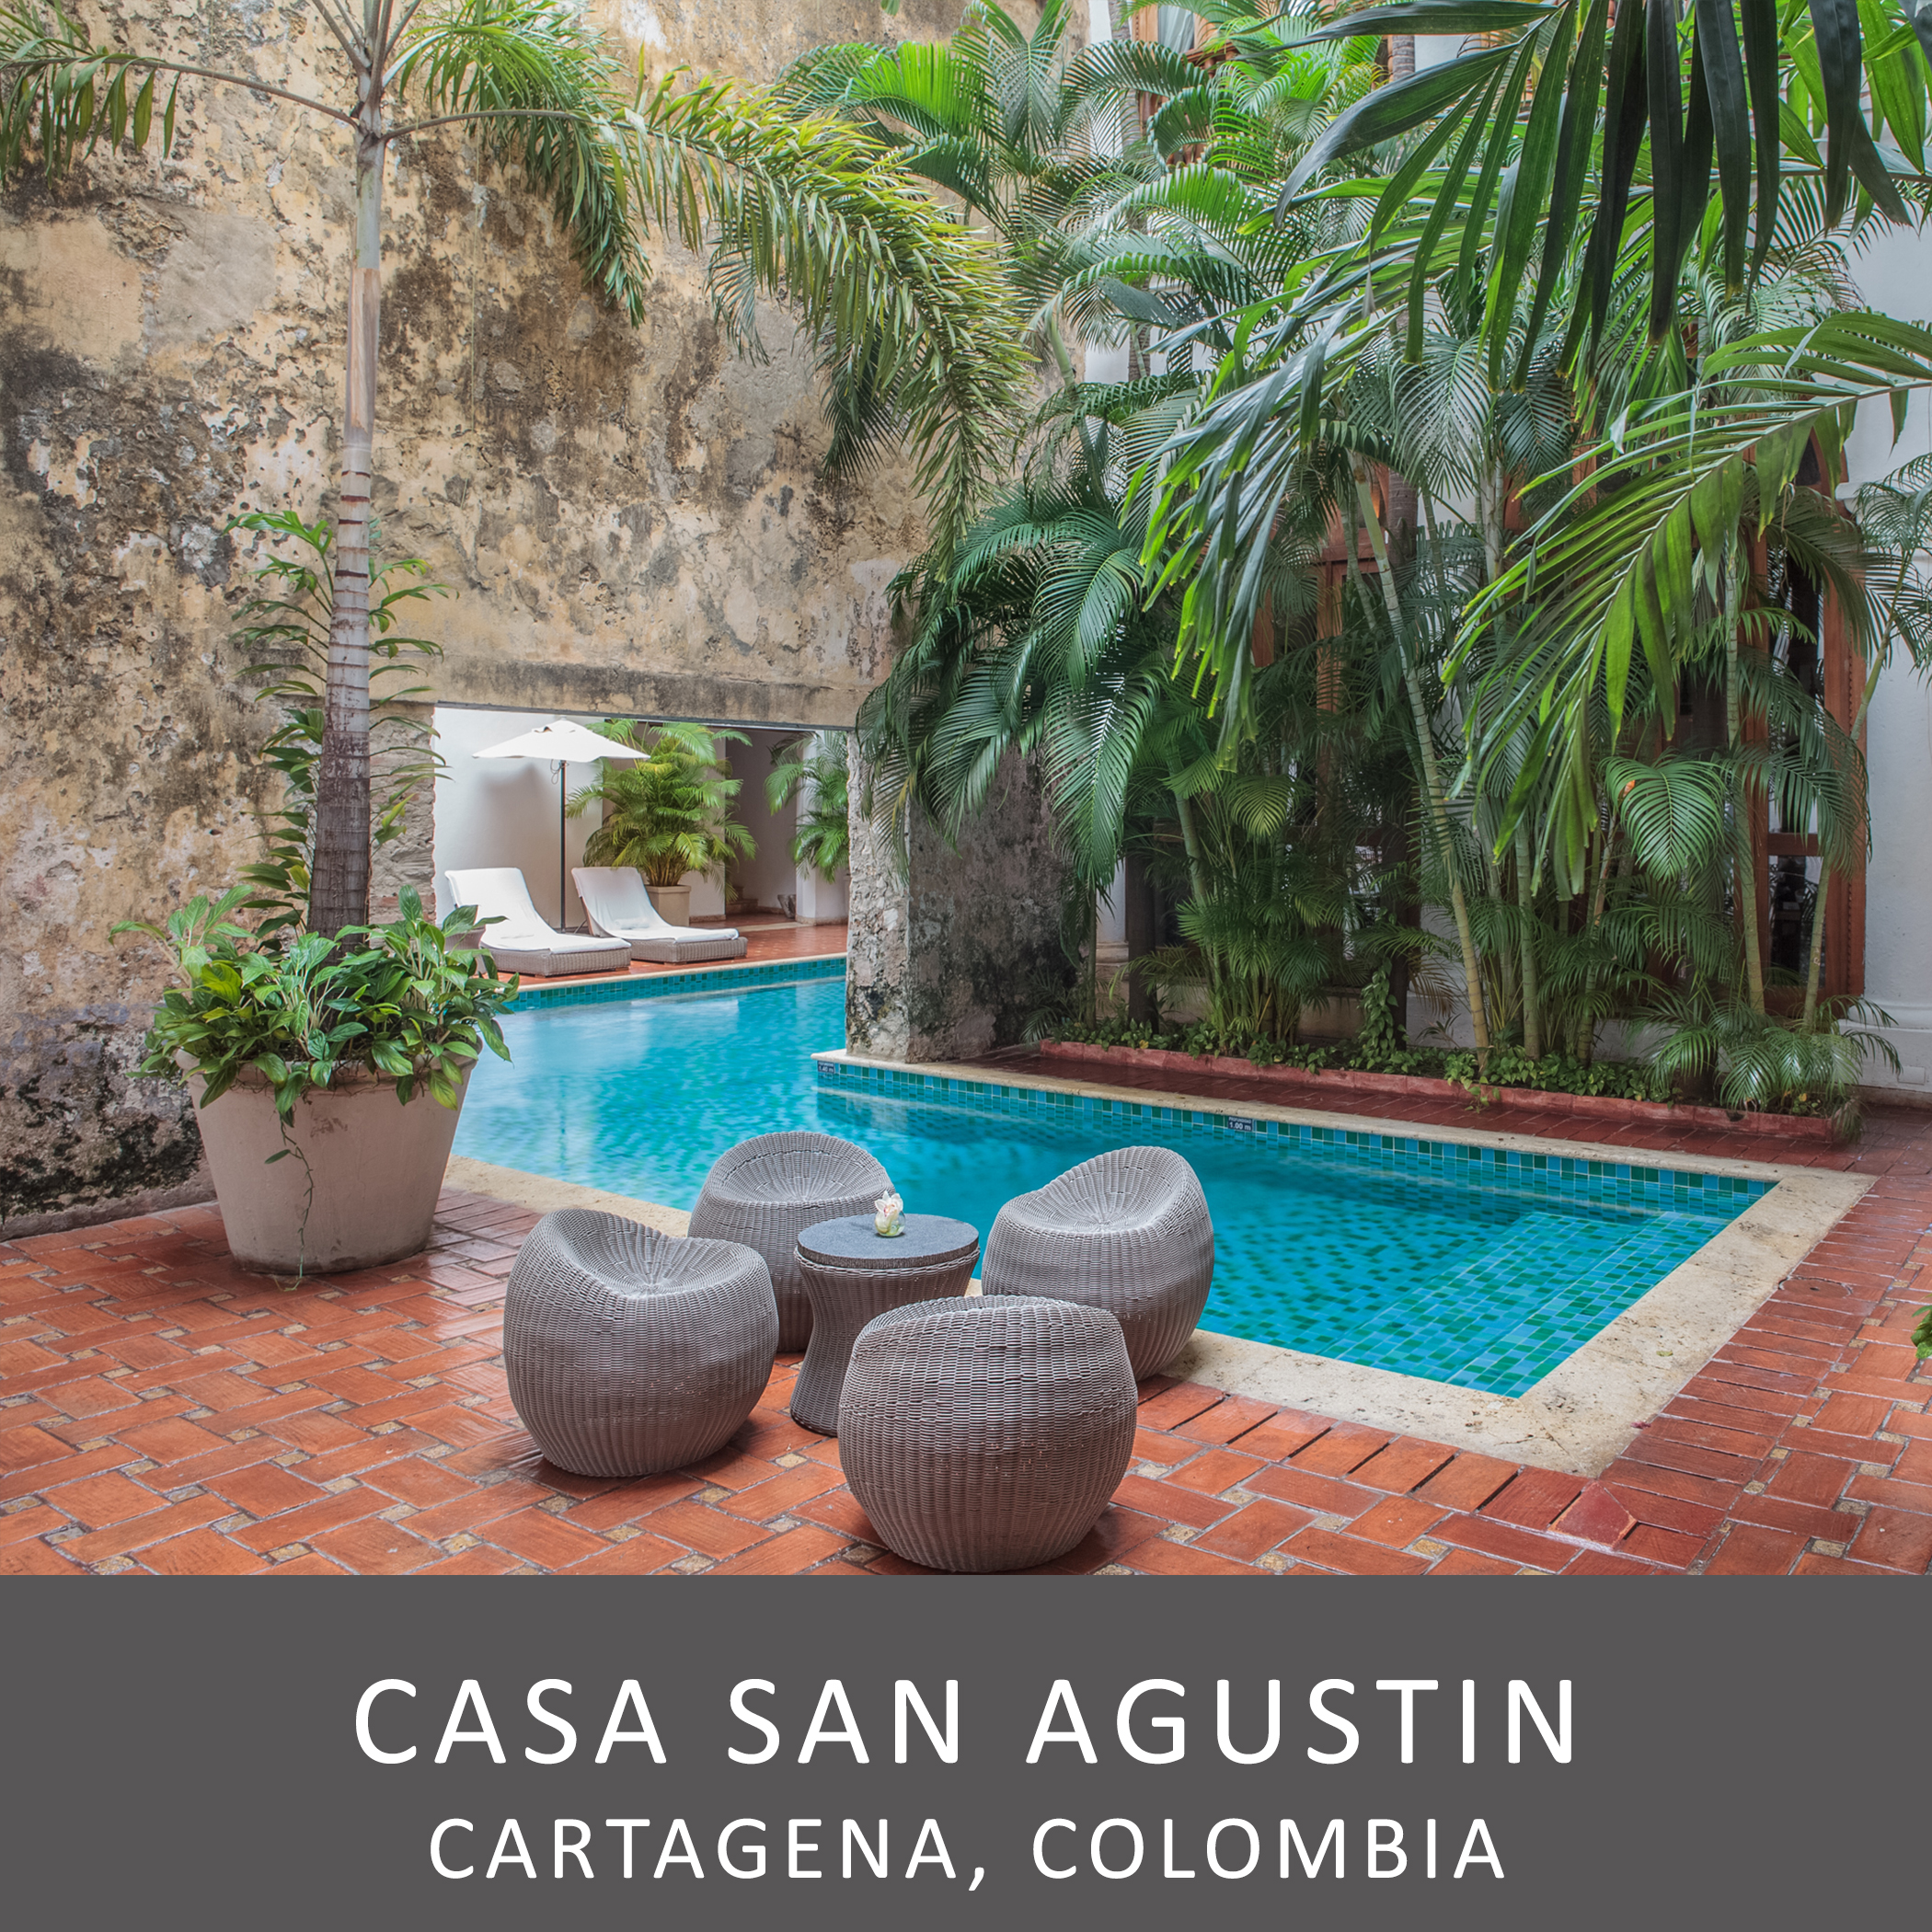 Casa San Agustin